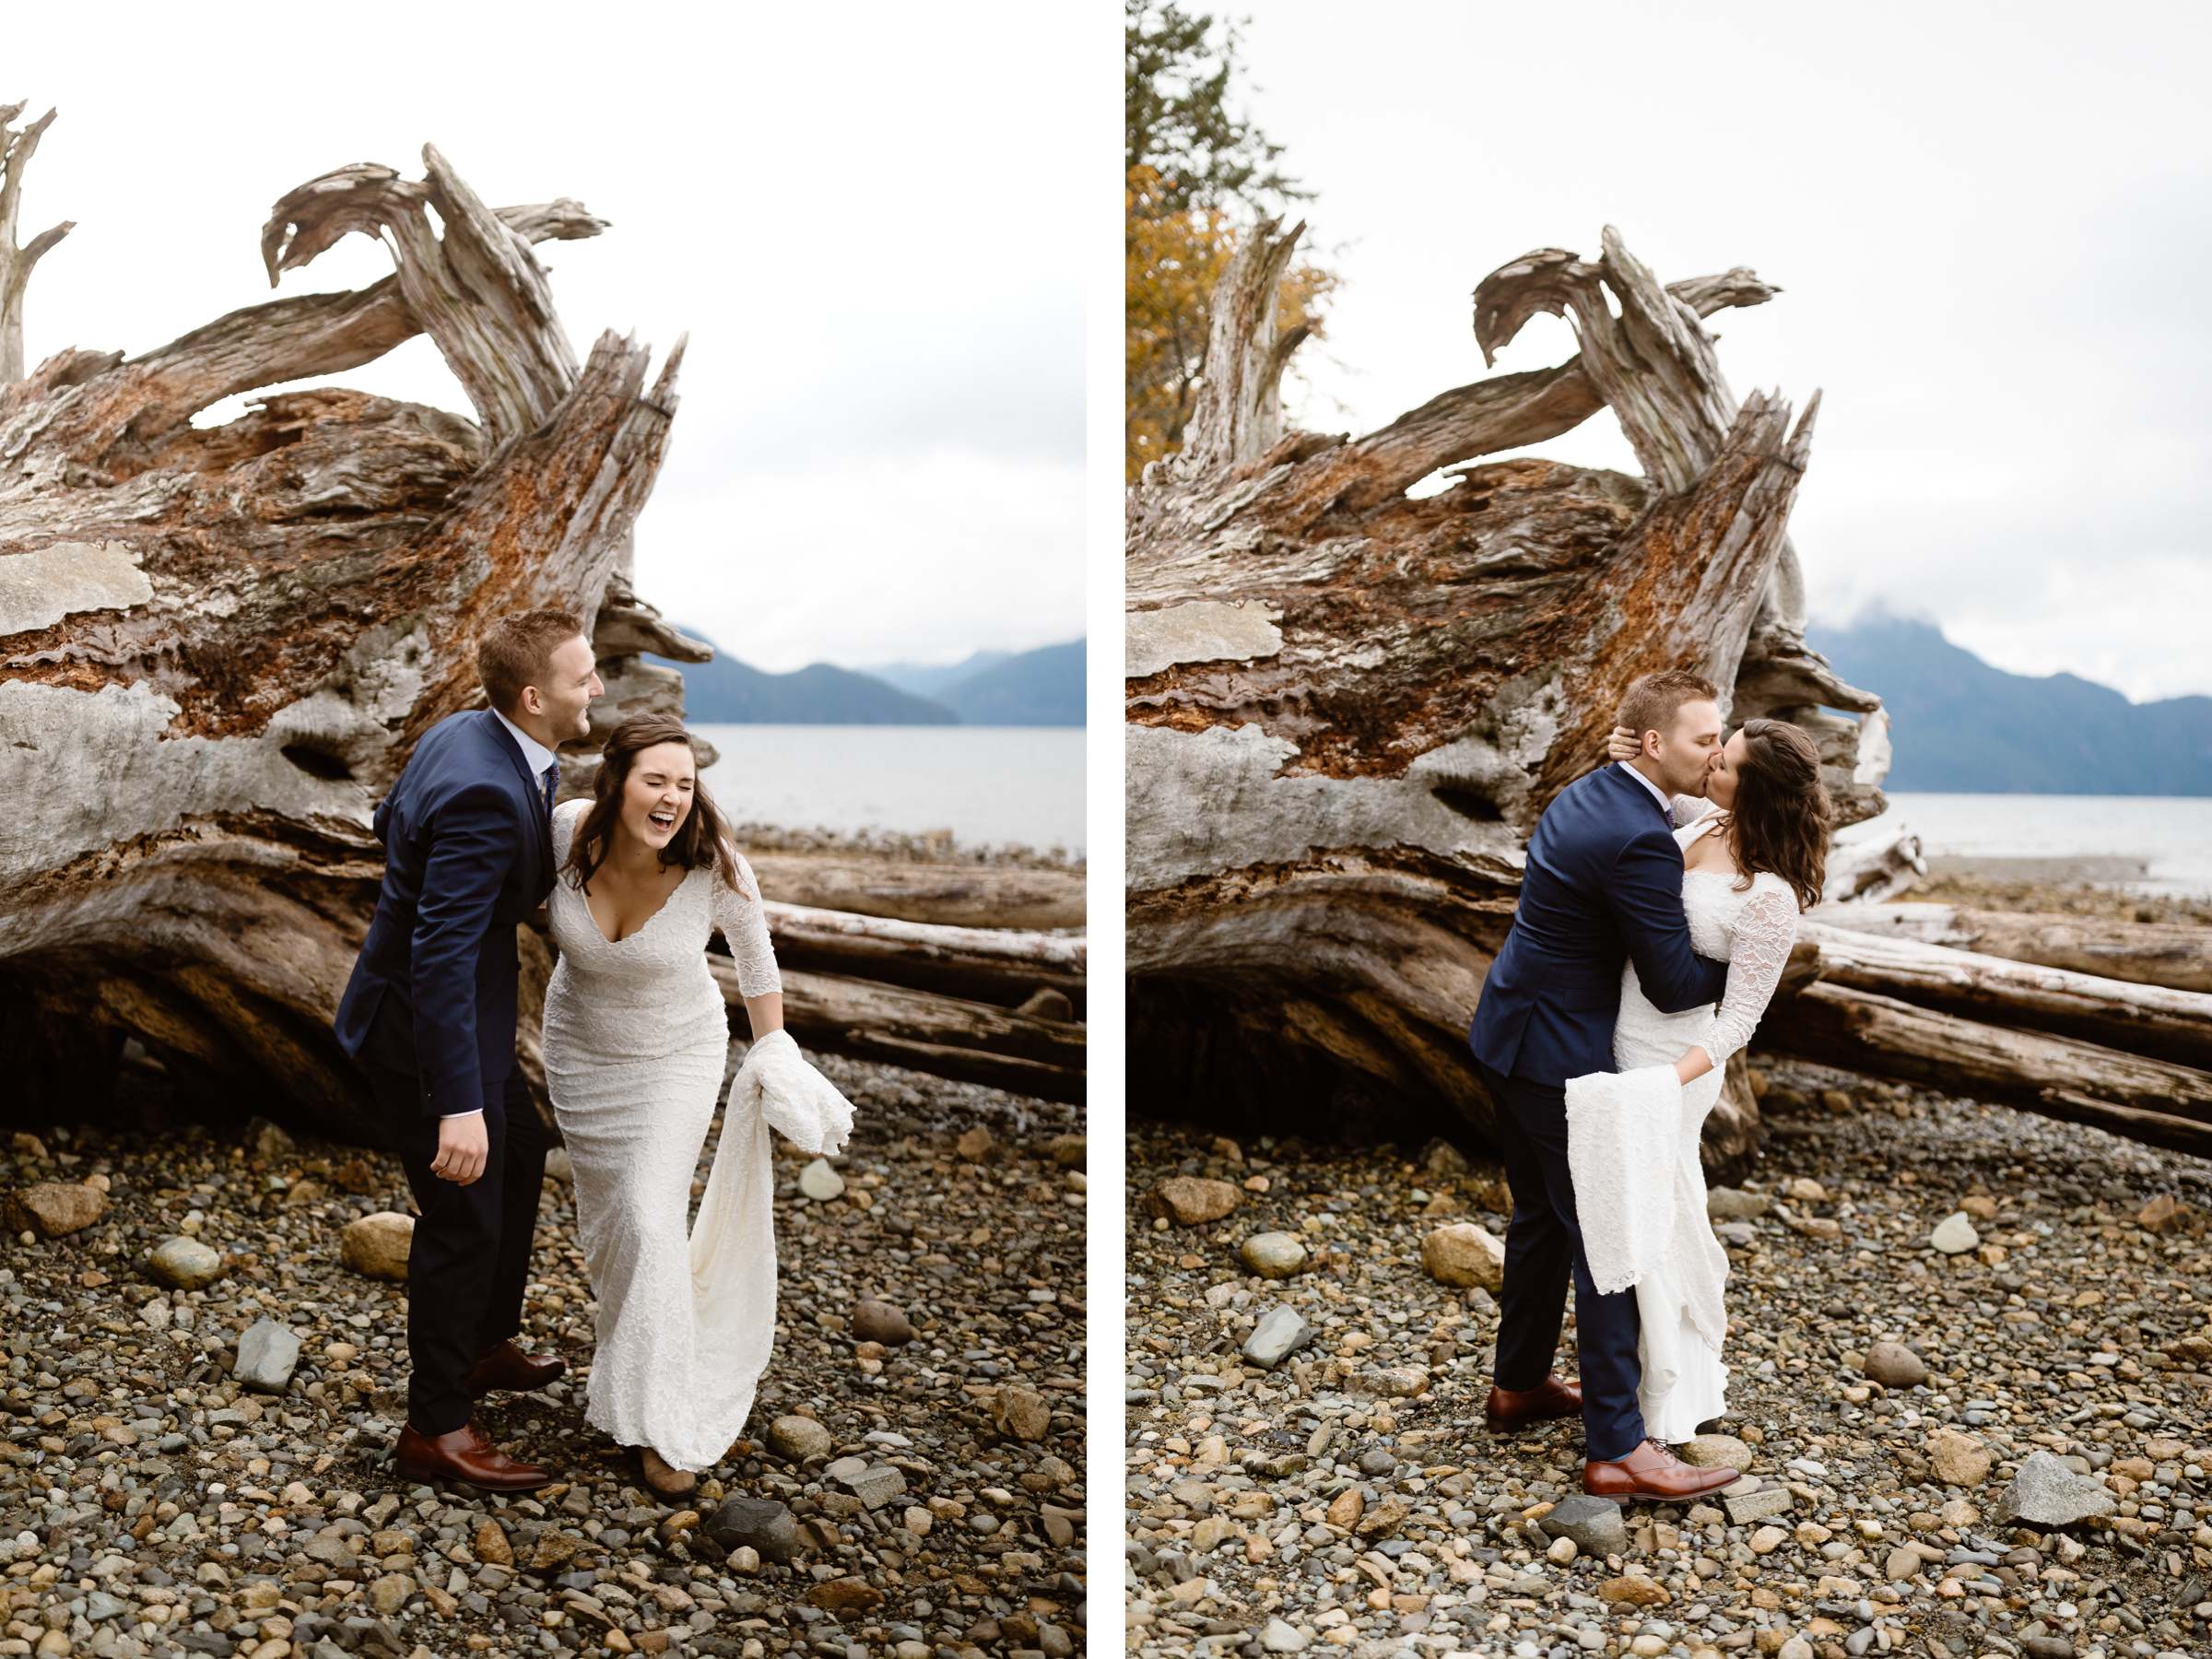 Squamish Wedding Photographers at an Adventurous Elopement - Image 7